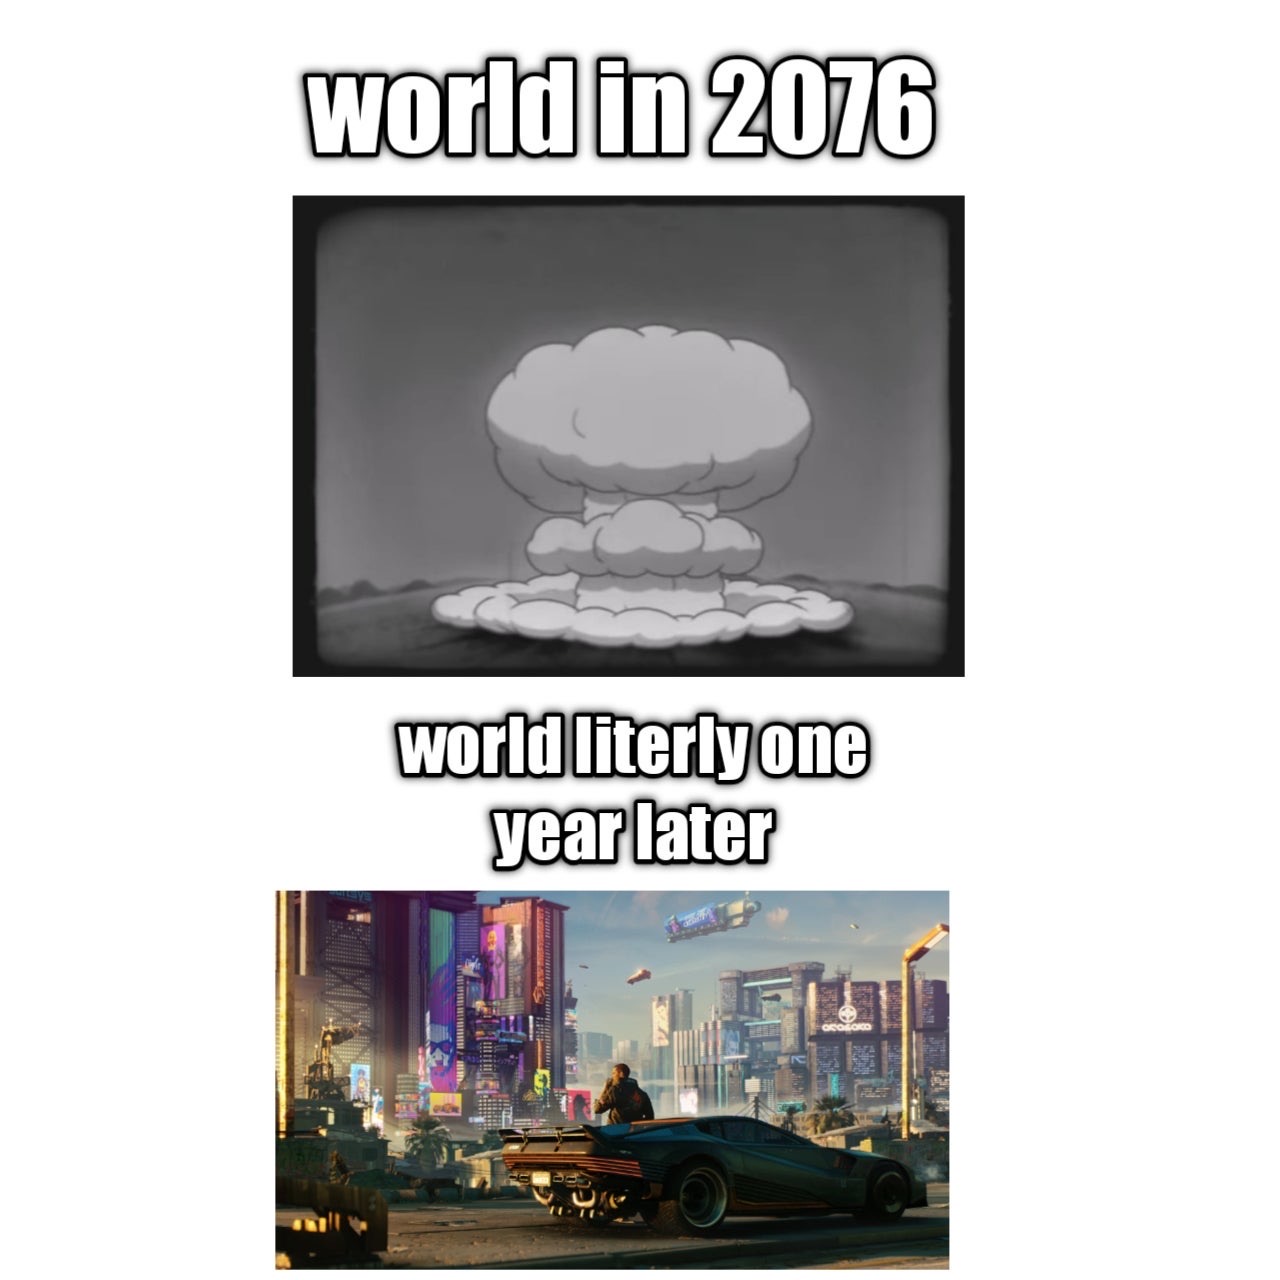 cyberpunk 2077 memes - Keanu Reeves - Cyberpunk 2077 - world in 2076 world literly one year later